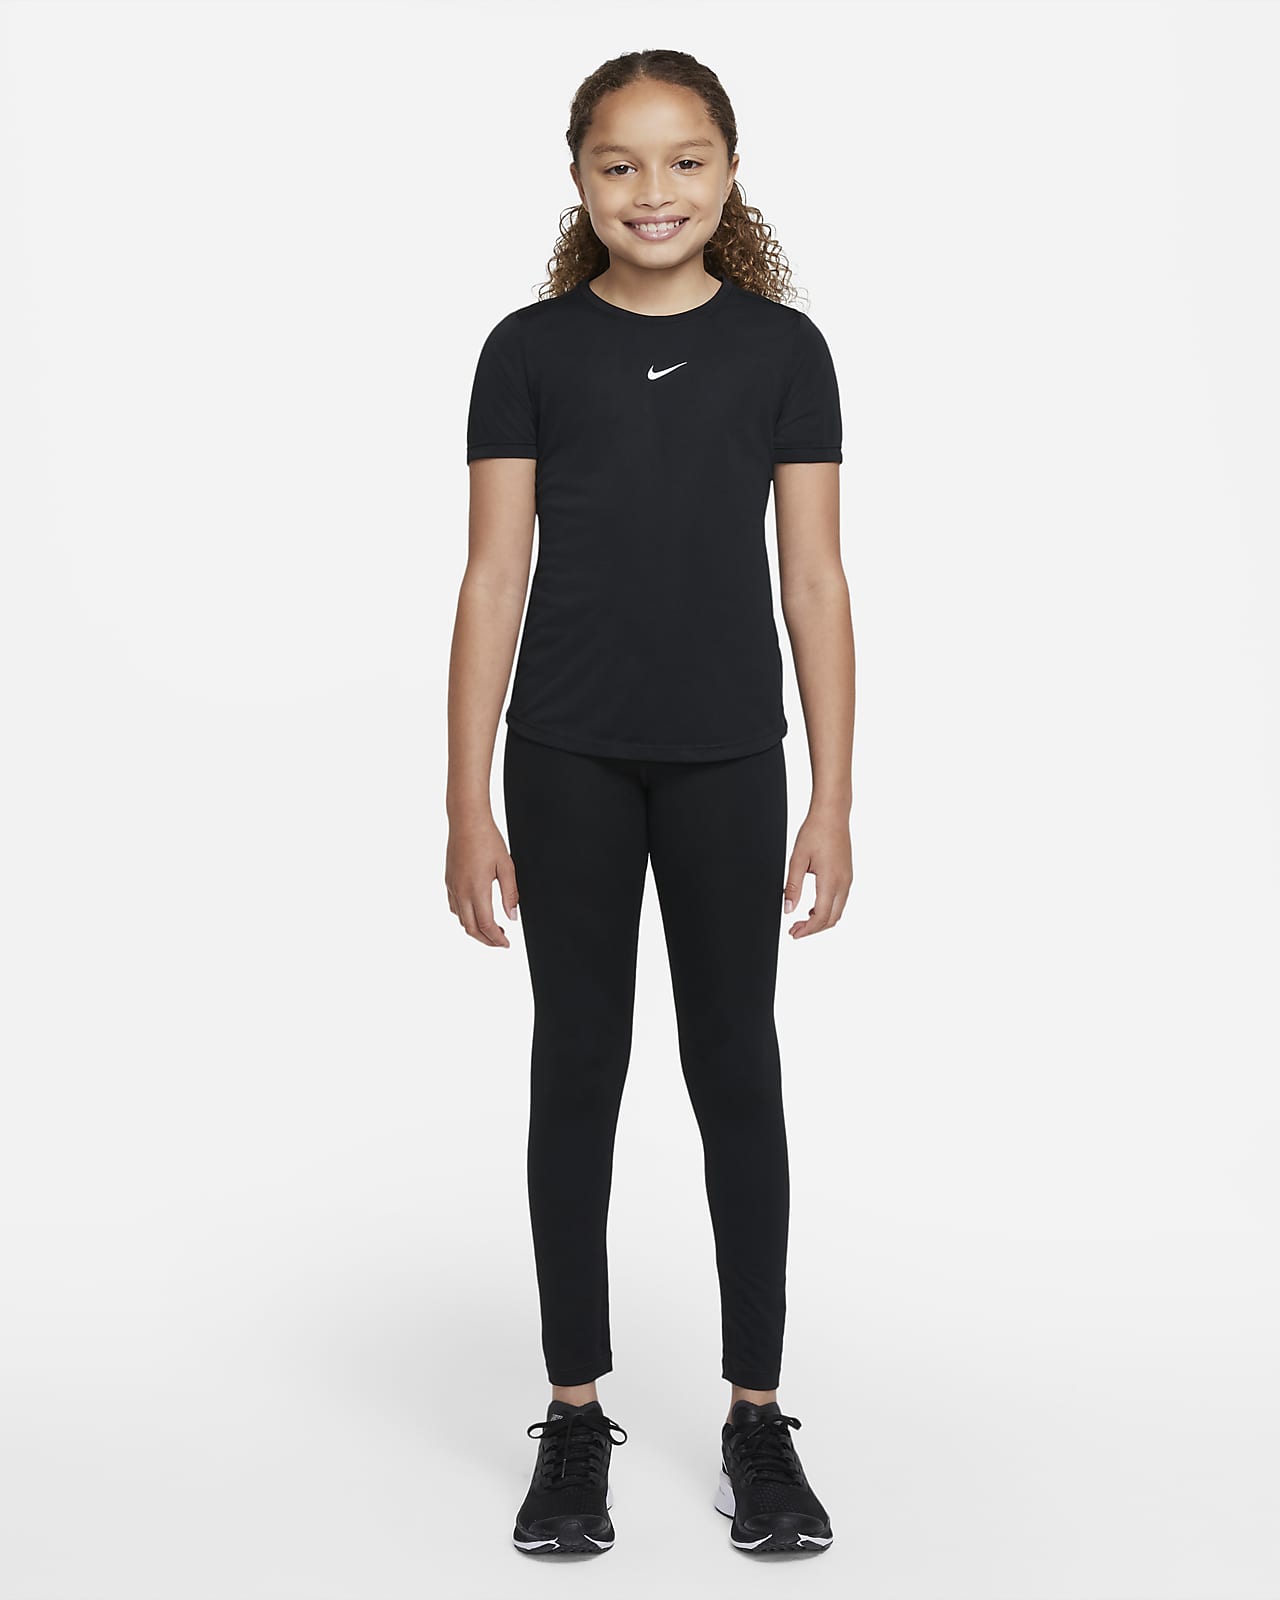 Nike One Big Kids' (Girls') Short-Sleeve Top.